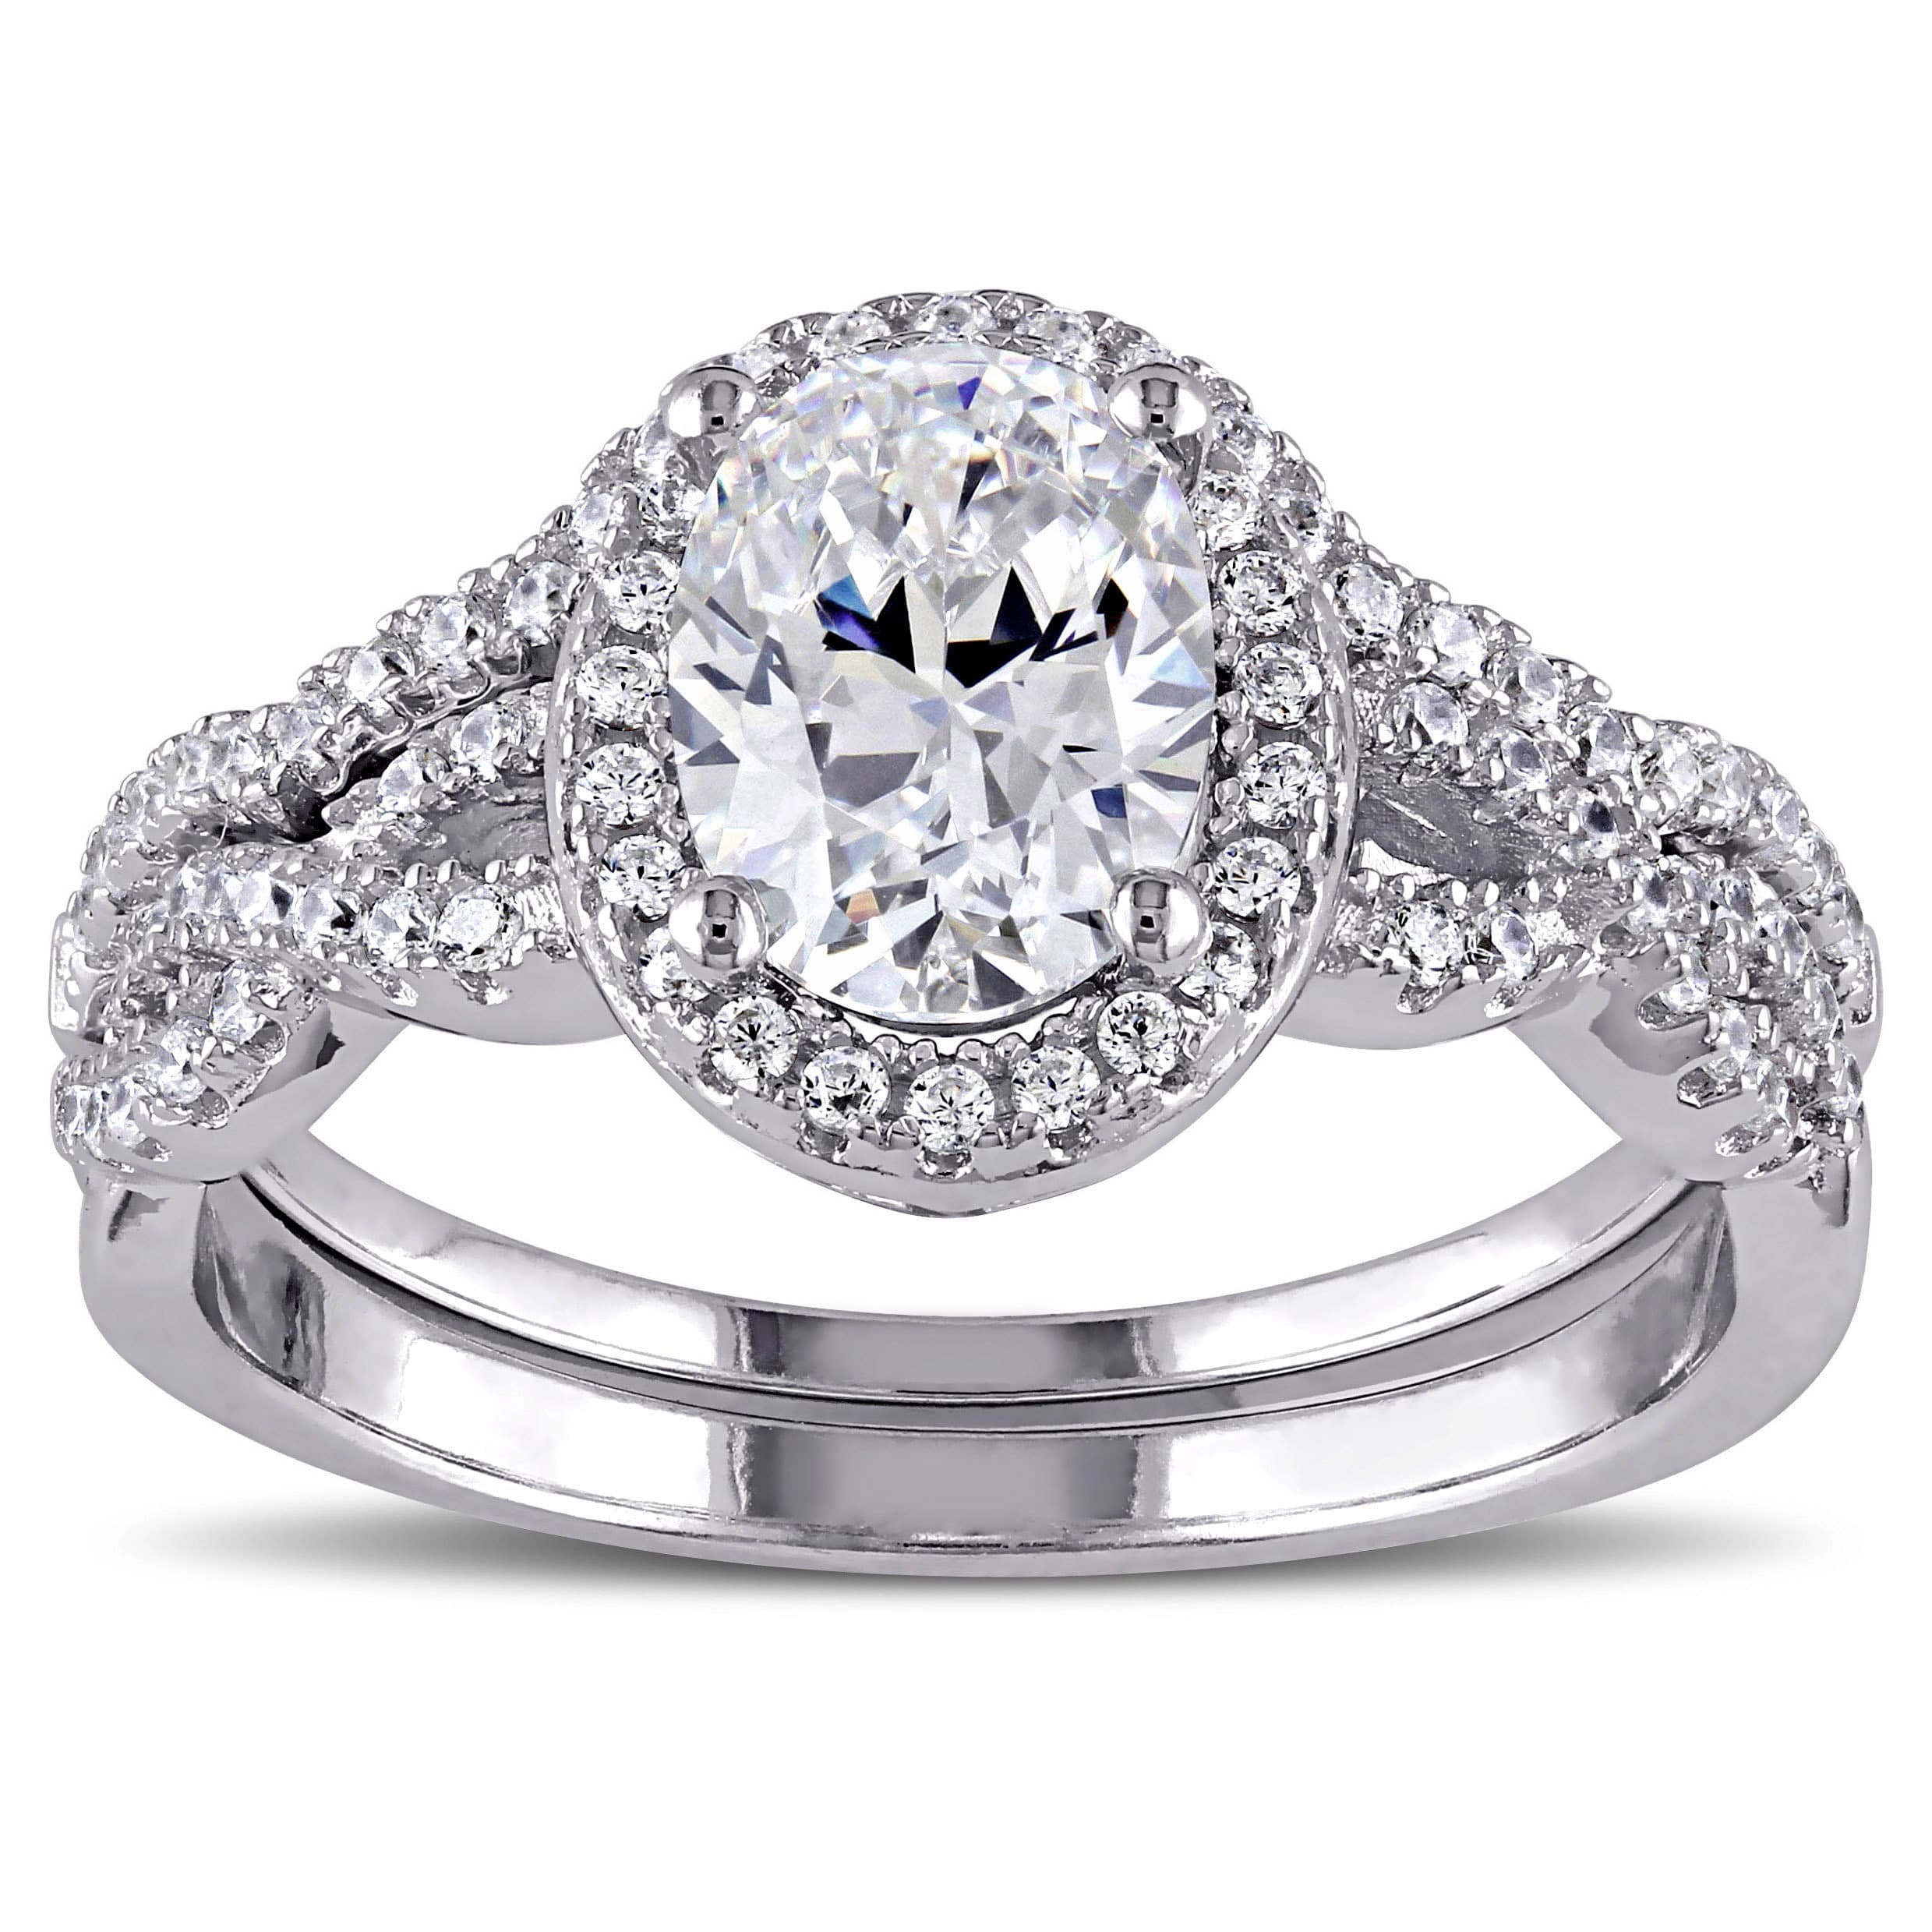 Wuziwen Womens Oval Cut Wedding Ring Sets Cubic Zirconia Rose Gold Sterling Silver Engegement Rings